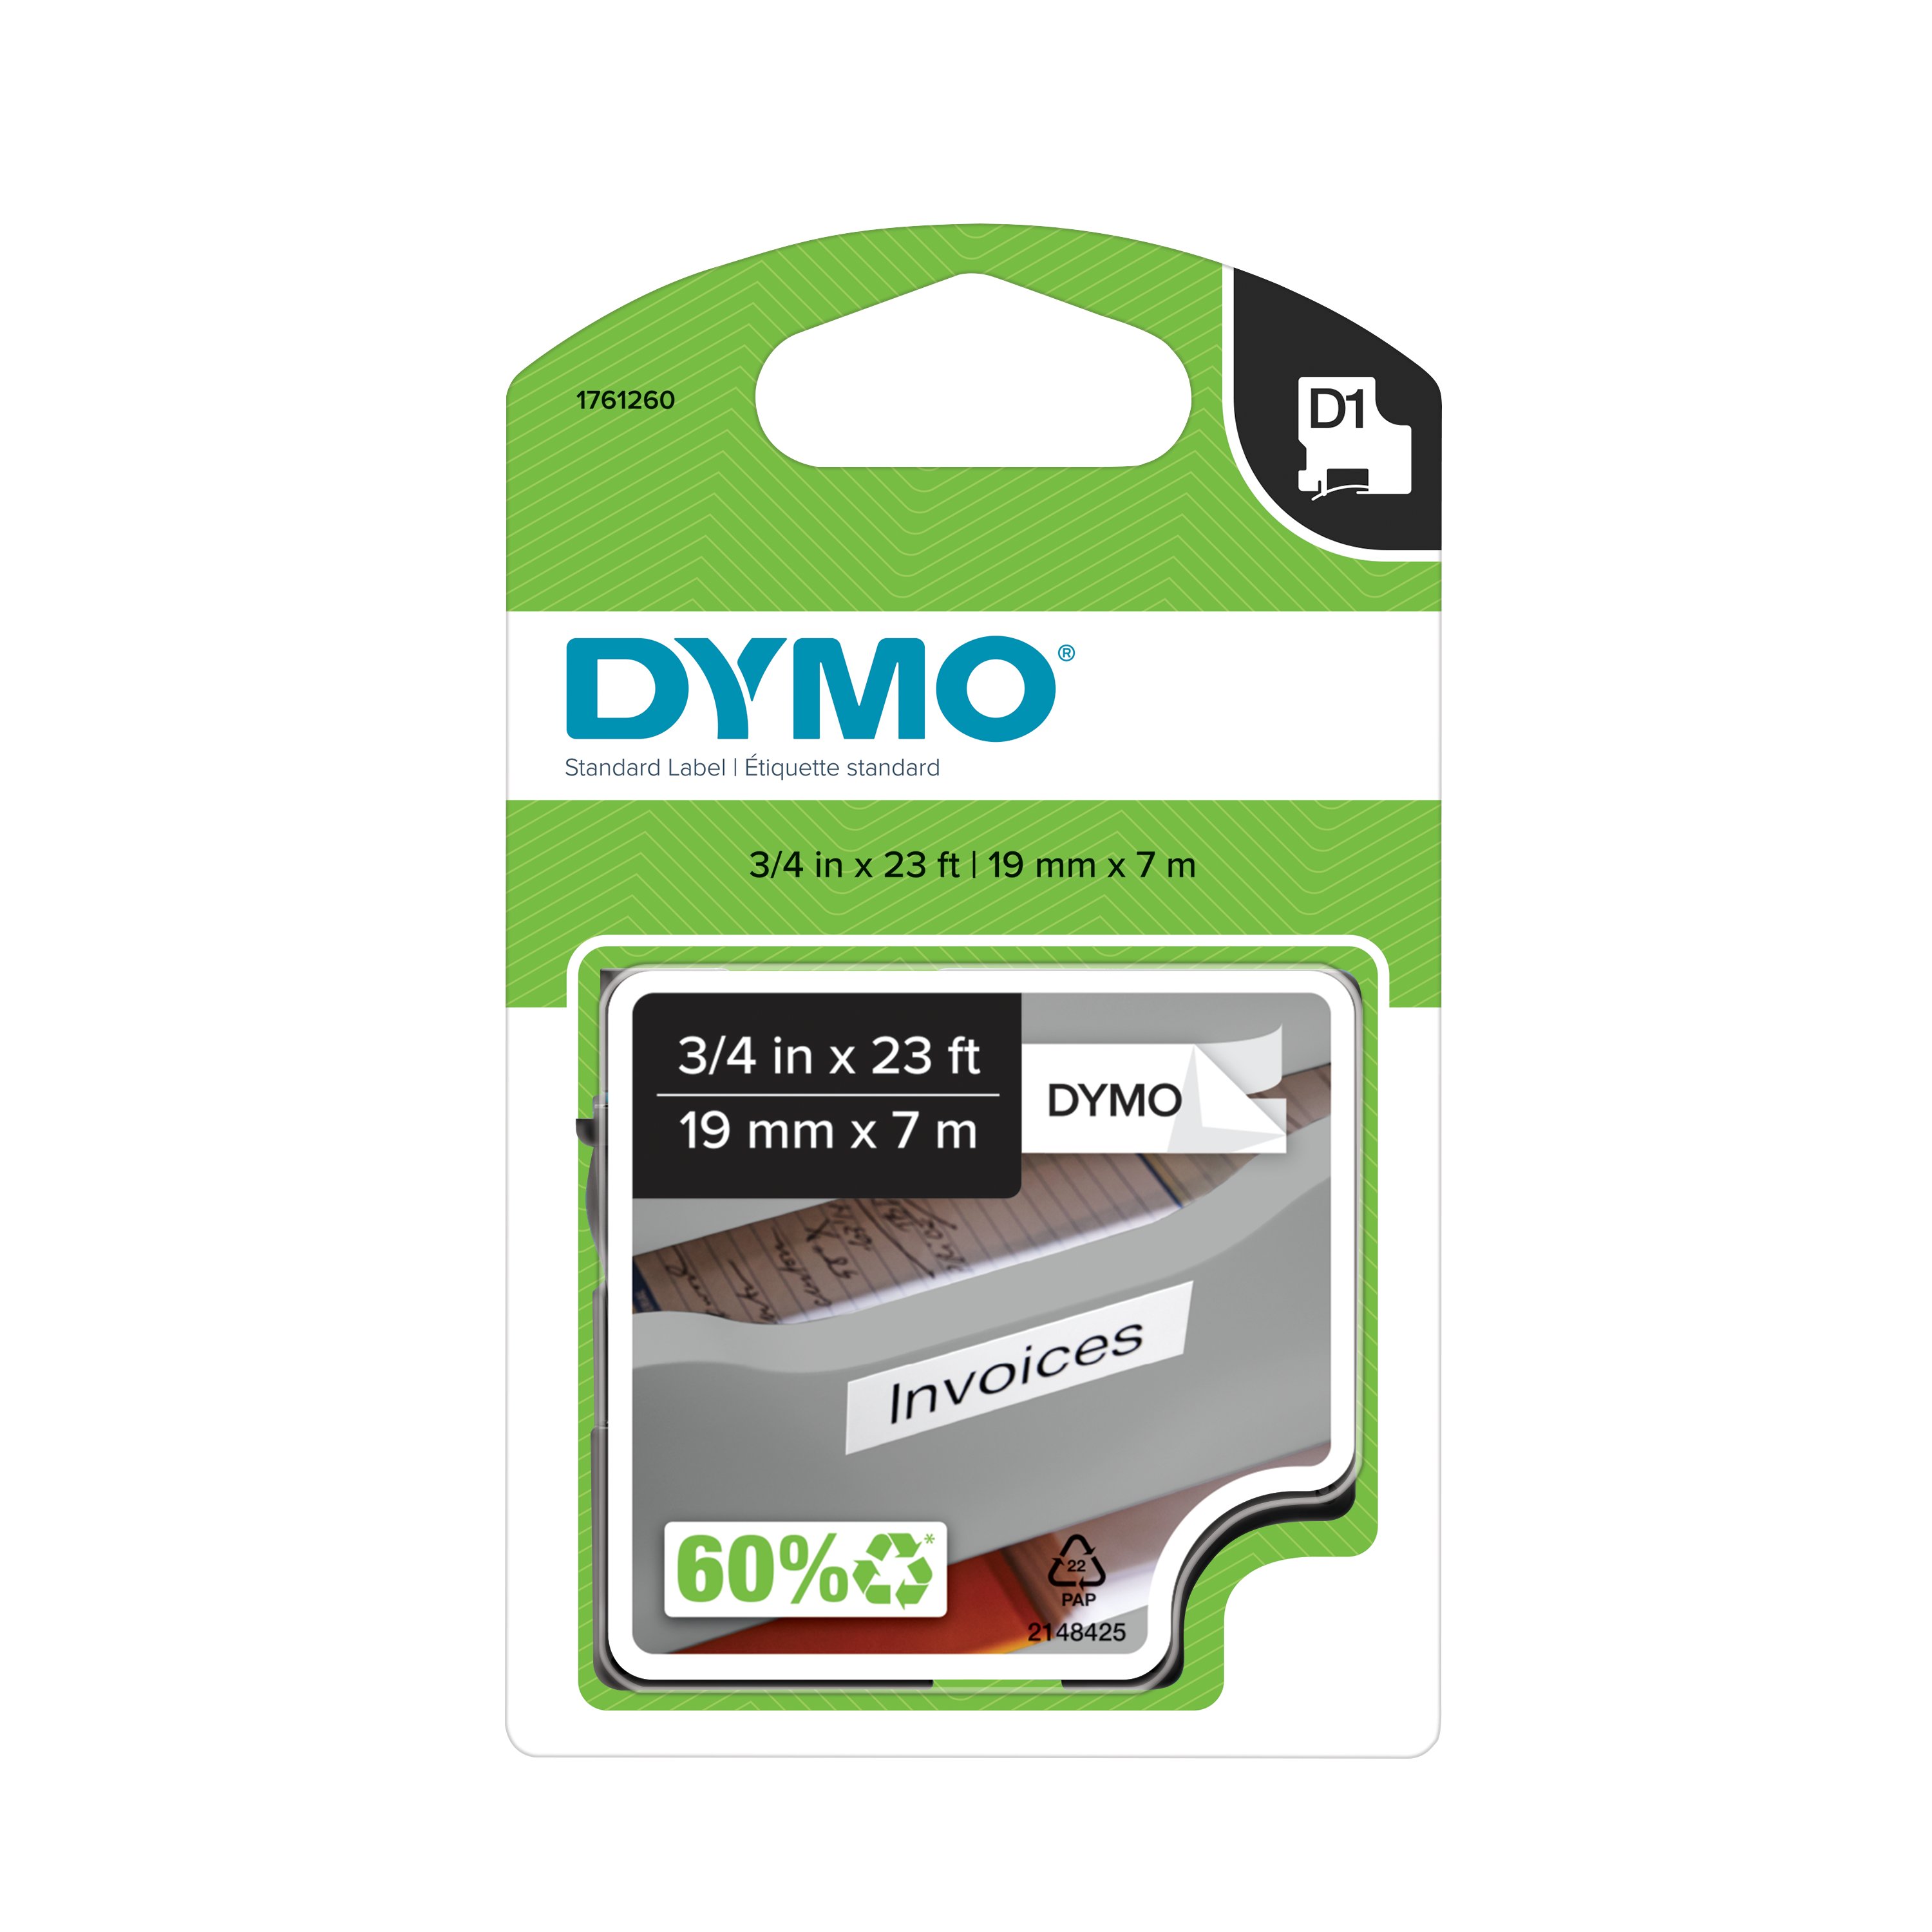 DYMO D1 Standard Labels | Dymo